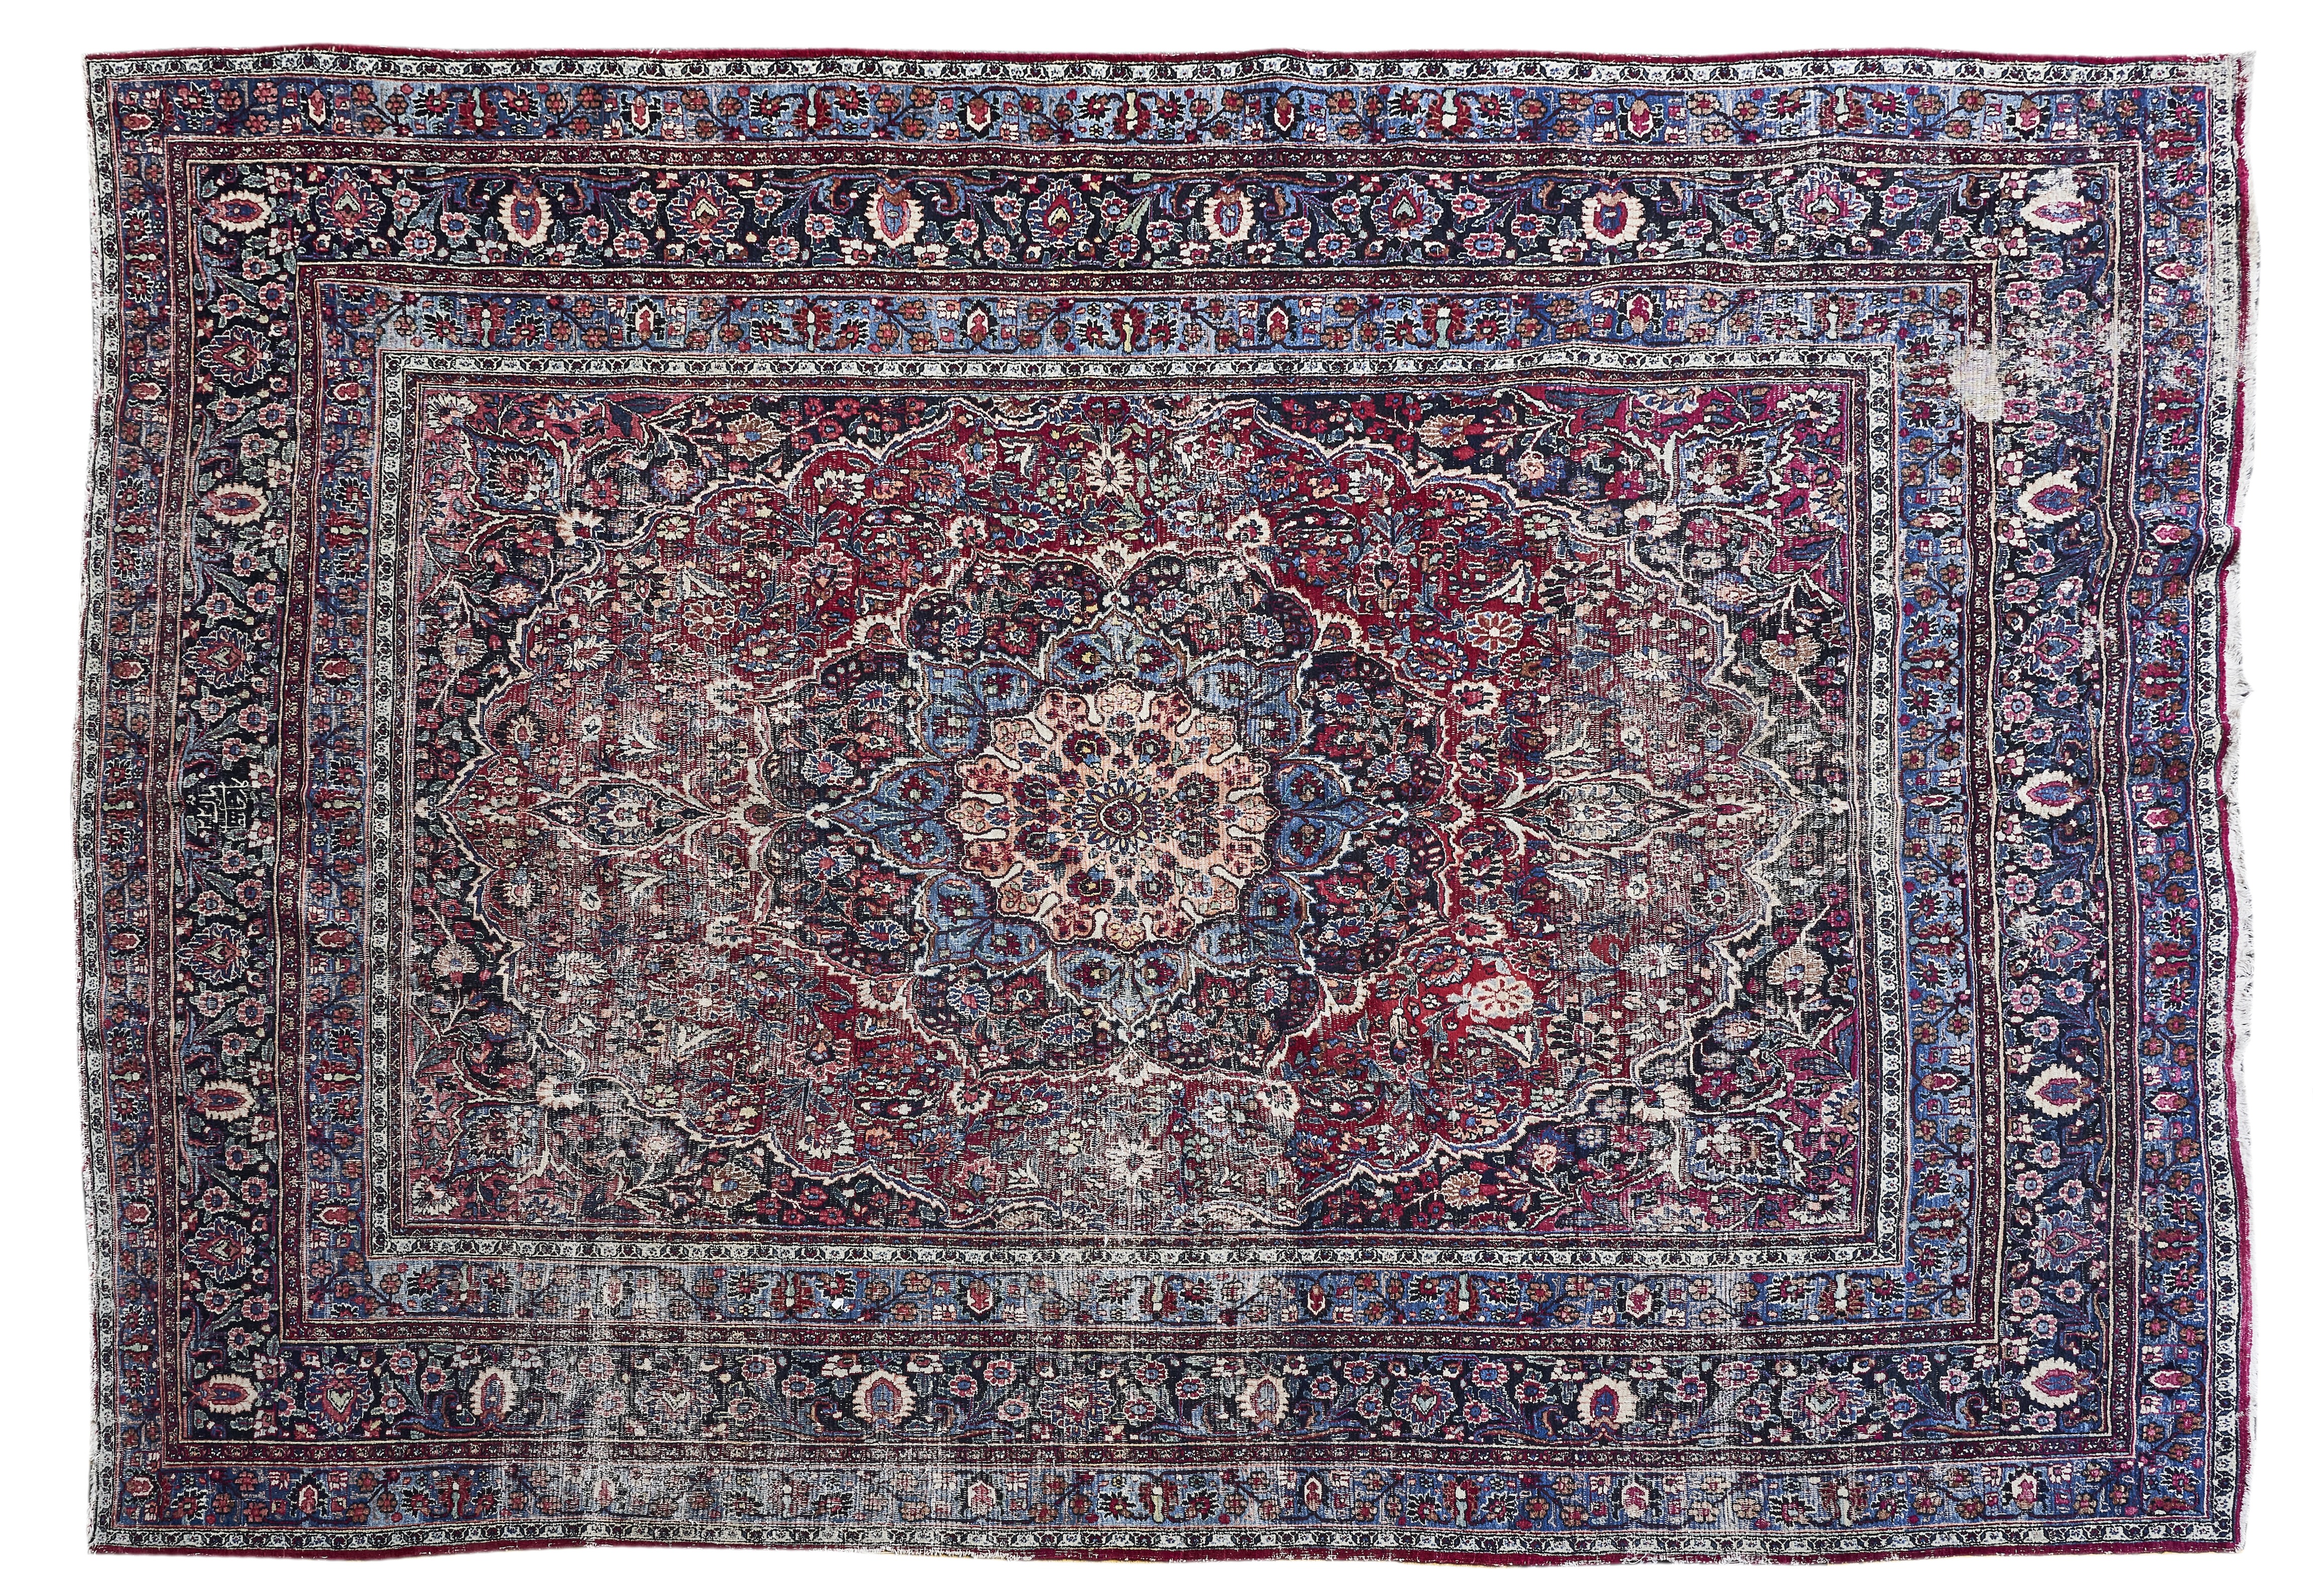 Circa 1890, Iran, A large Mashad rug